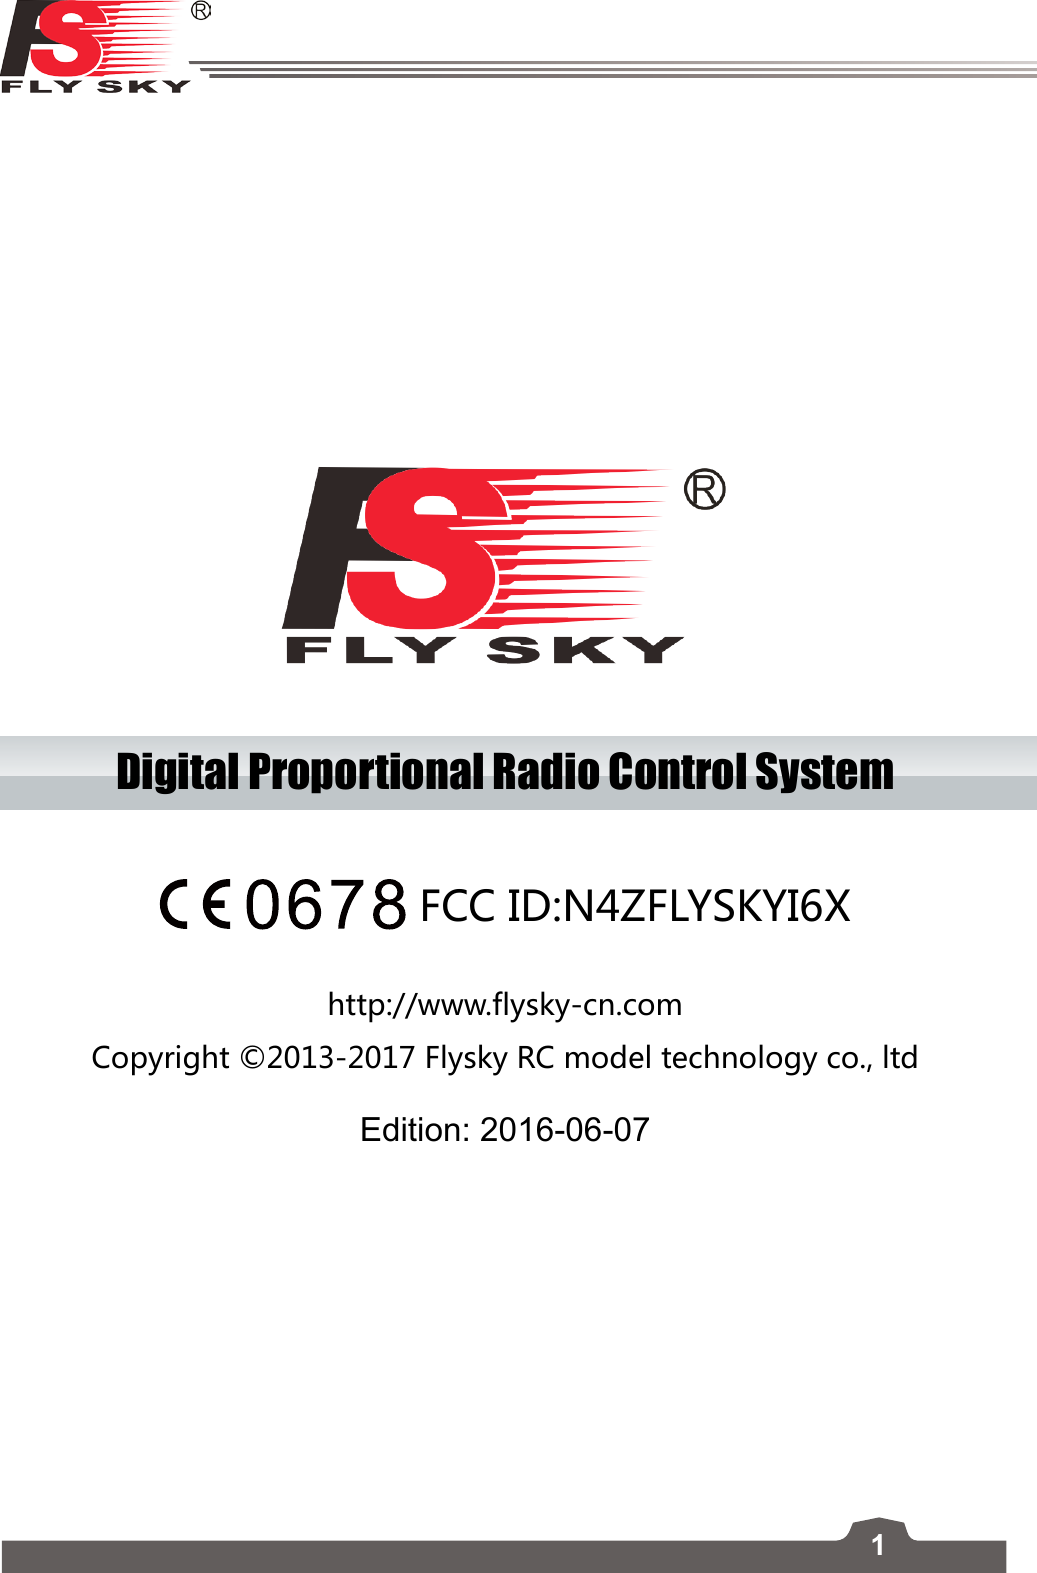 1FS-l6     Digital Proportional Radio Control Systemhttp://www.flysky-cn.comCopyright ©2013-2017 Flysky RC model technology co., ltdEdition: 2016-06-07FCC ID:N4ZFLYSKYI6X